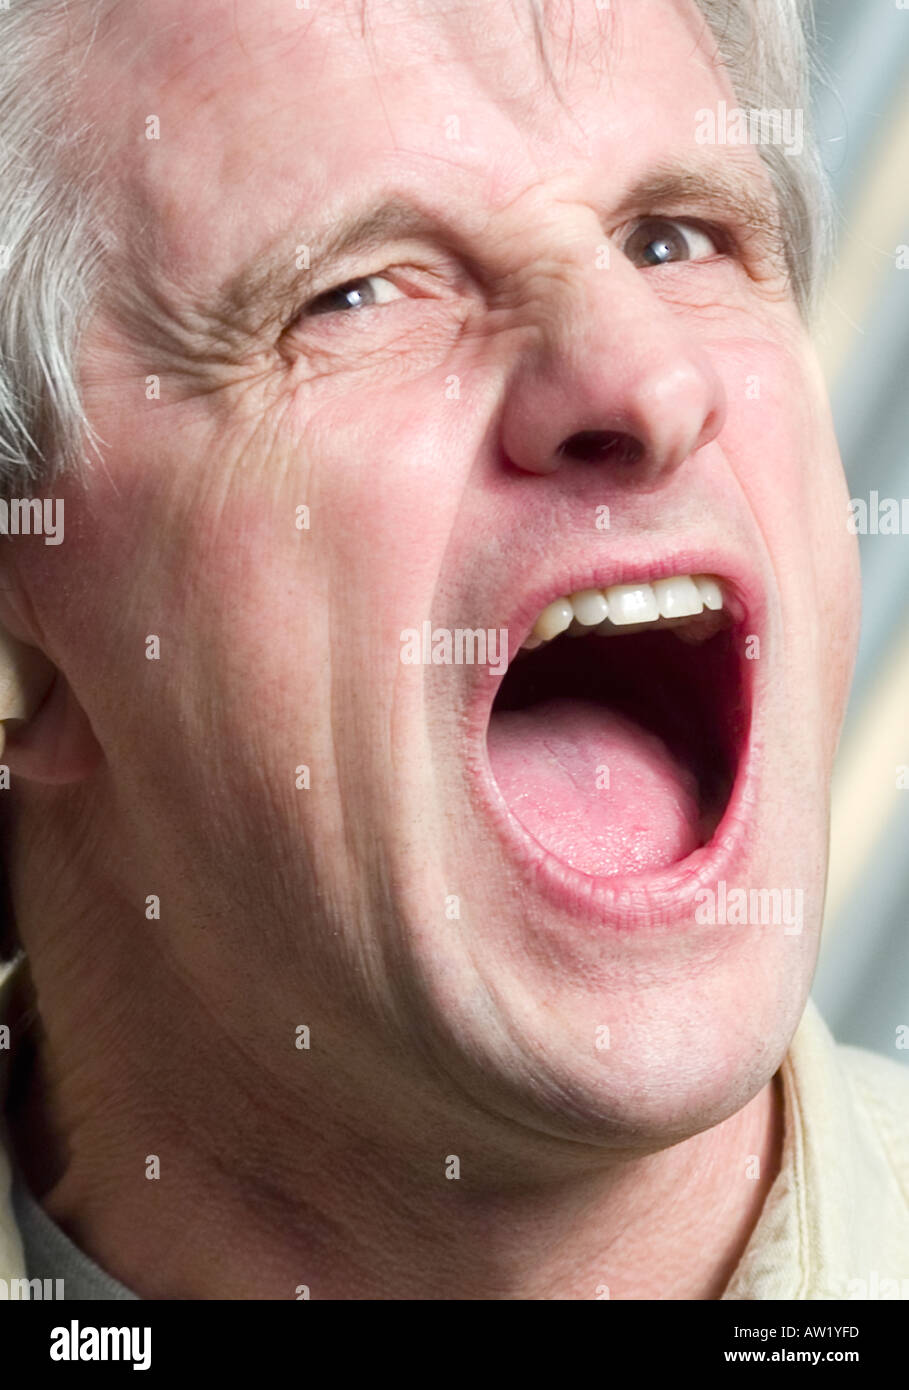 Portrait of Caucasian man shouting Stock Photo